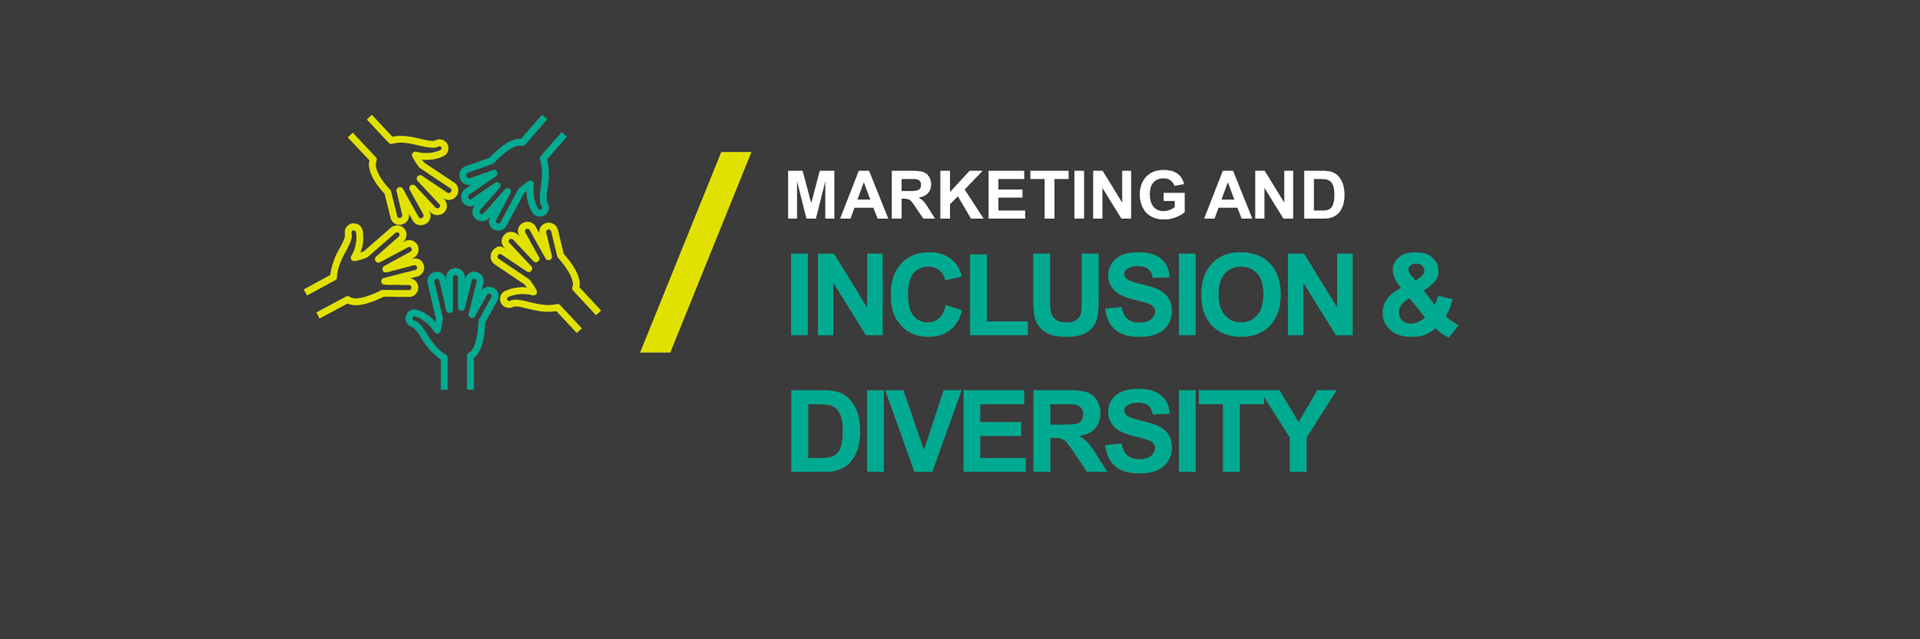 inclusion diversity